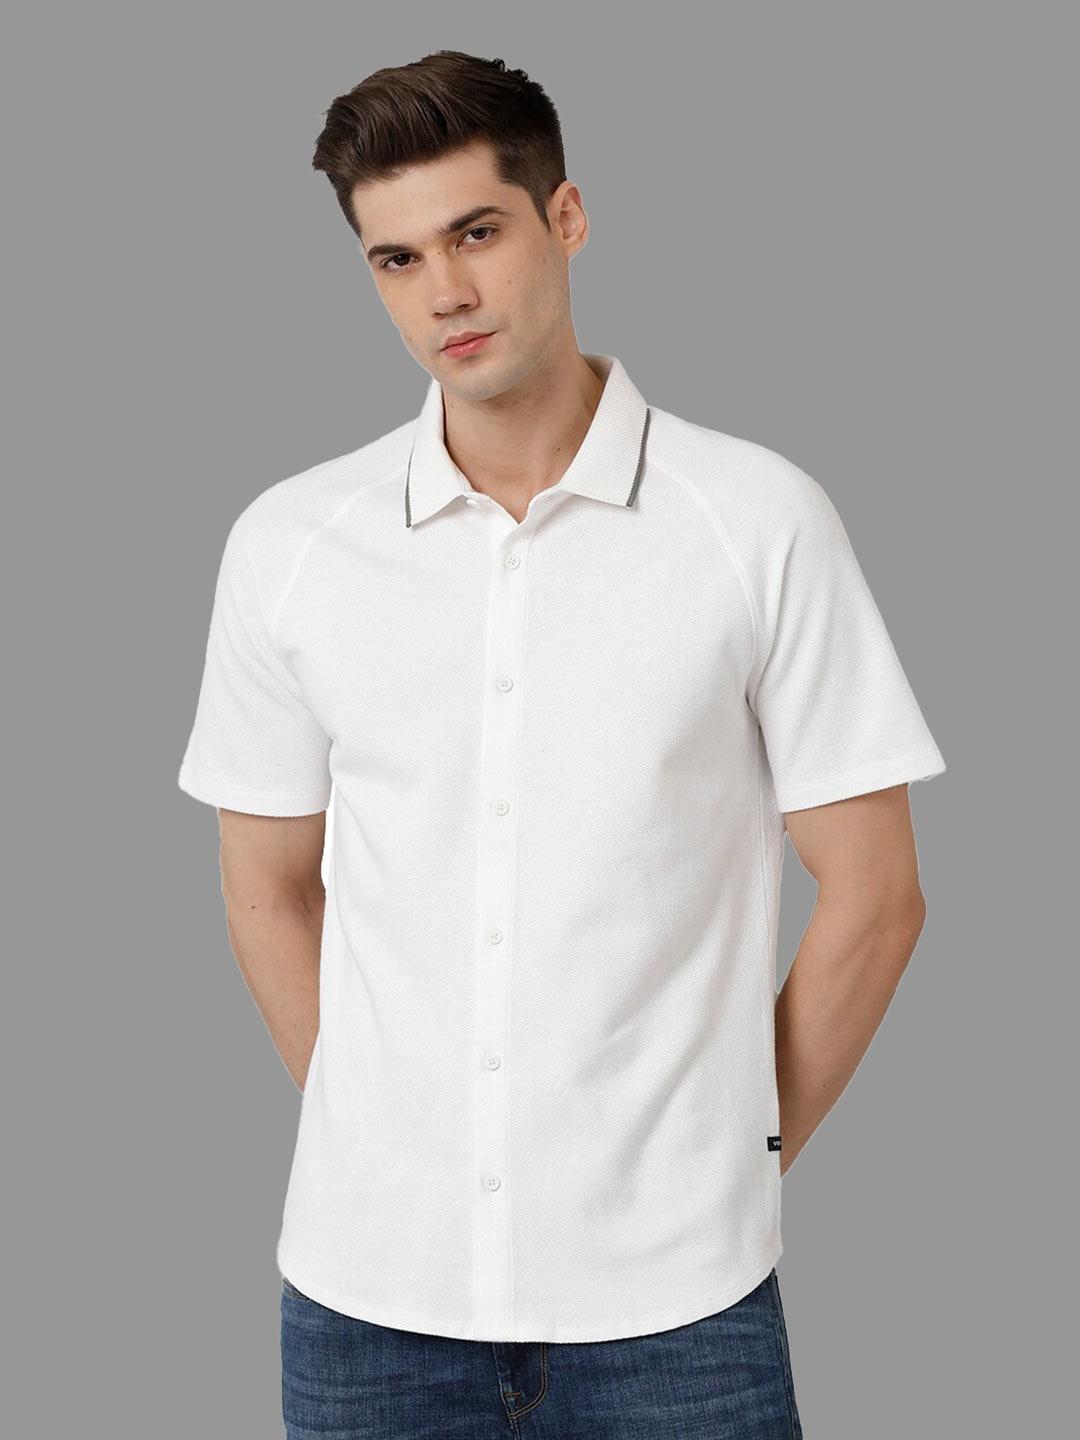 Voi Jeans Men White Classic Opaque Casual Shirt